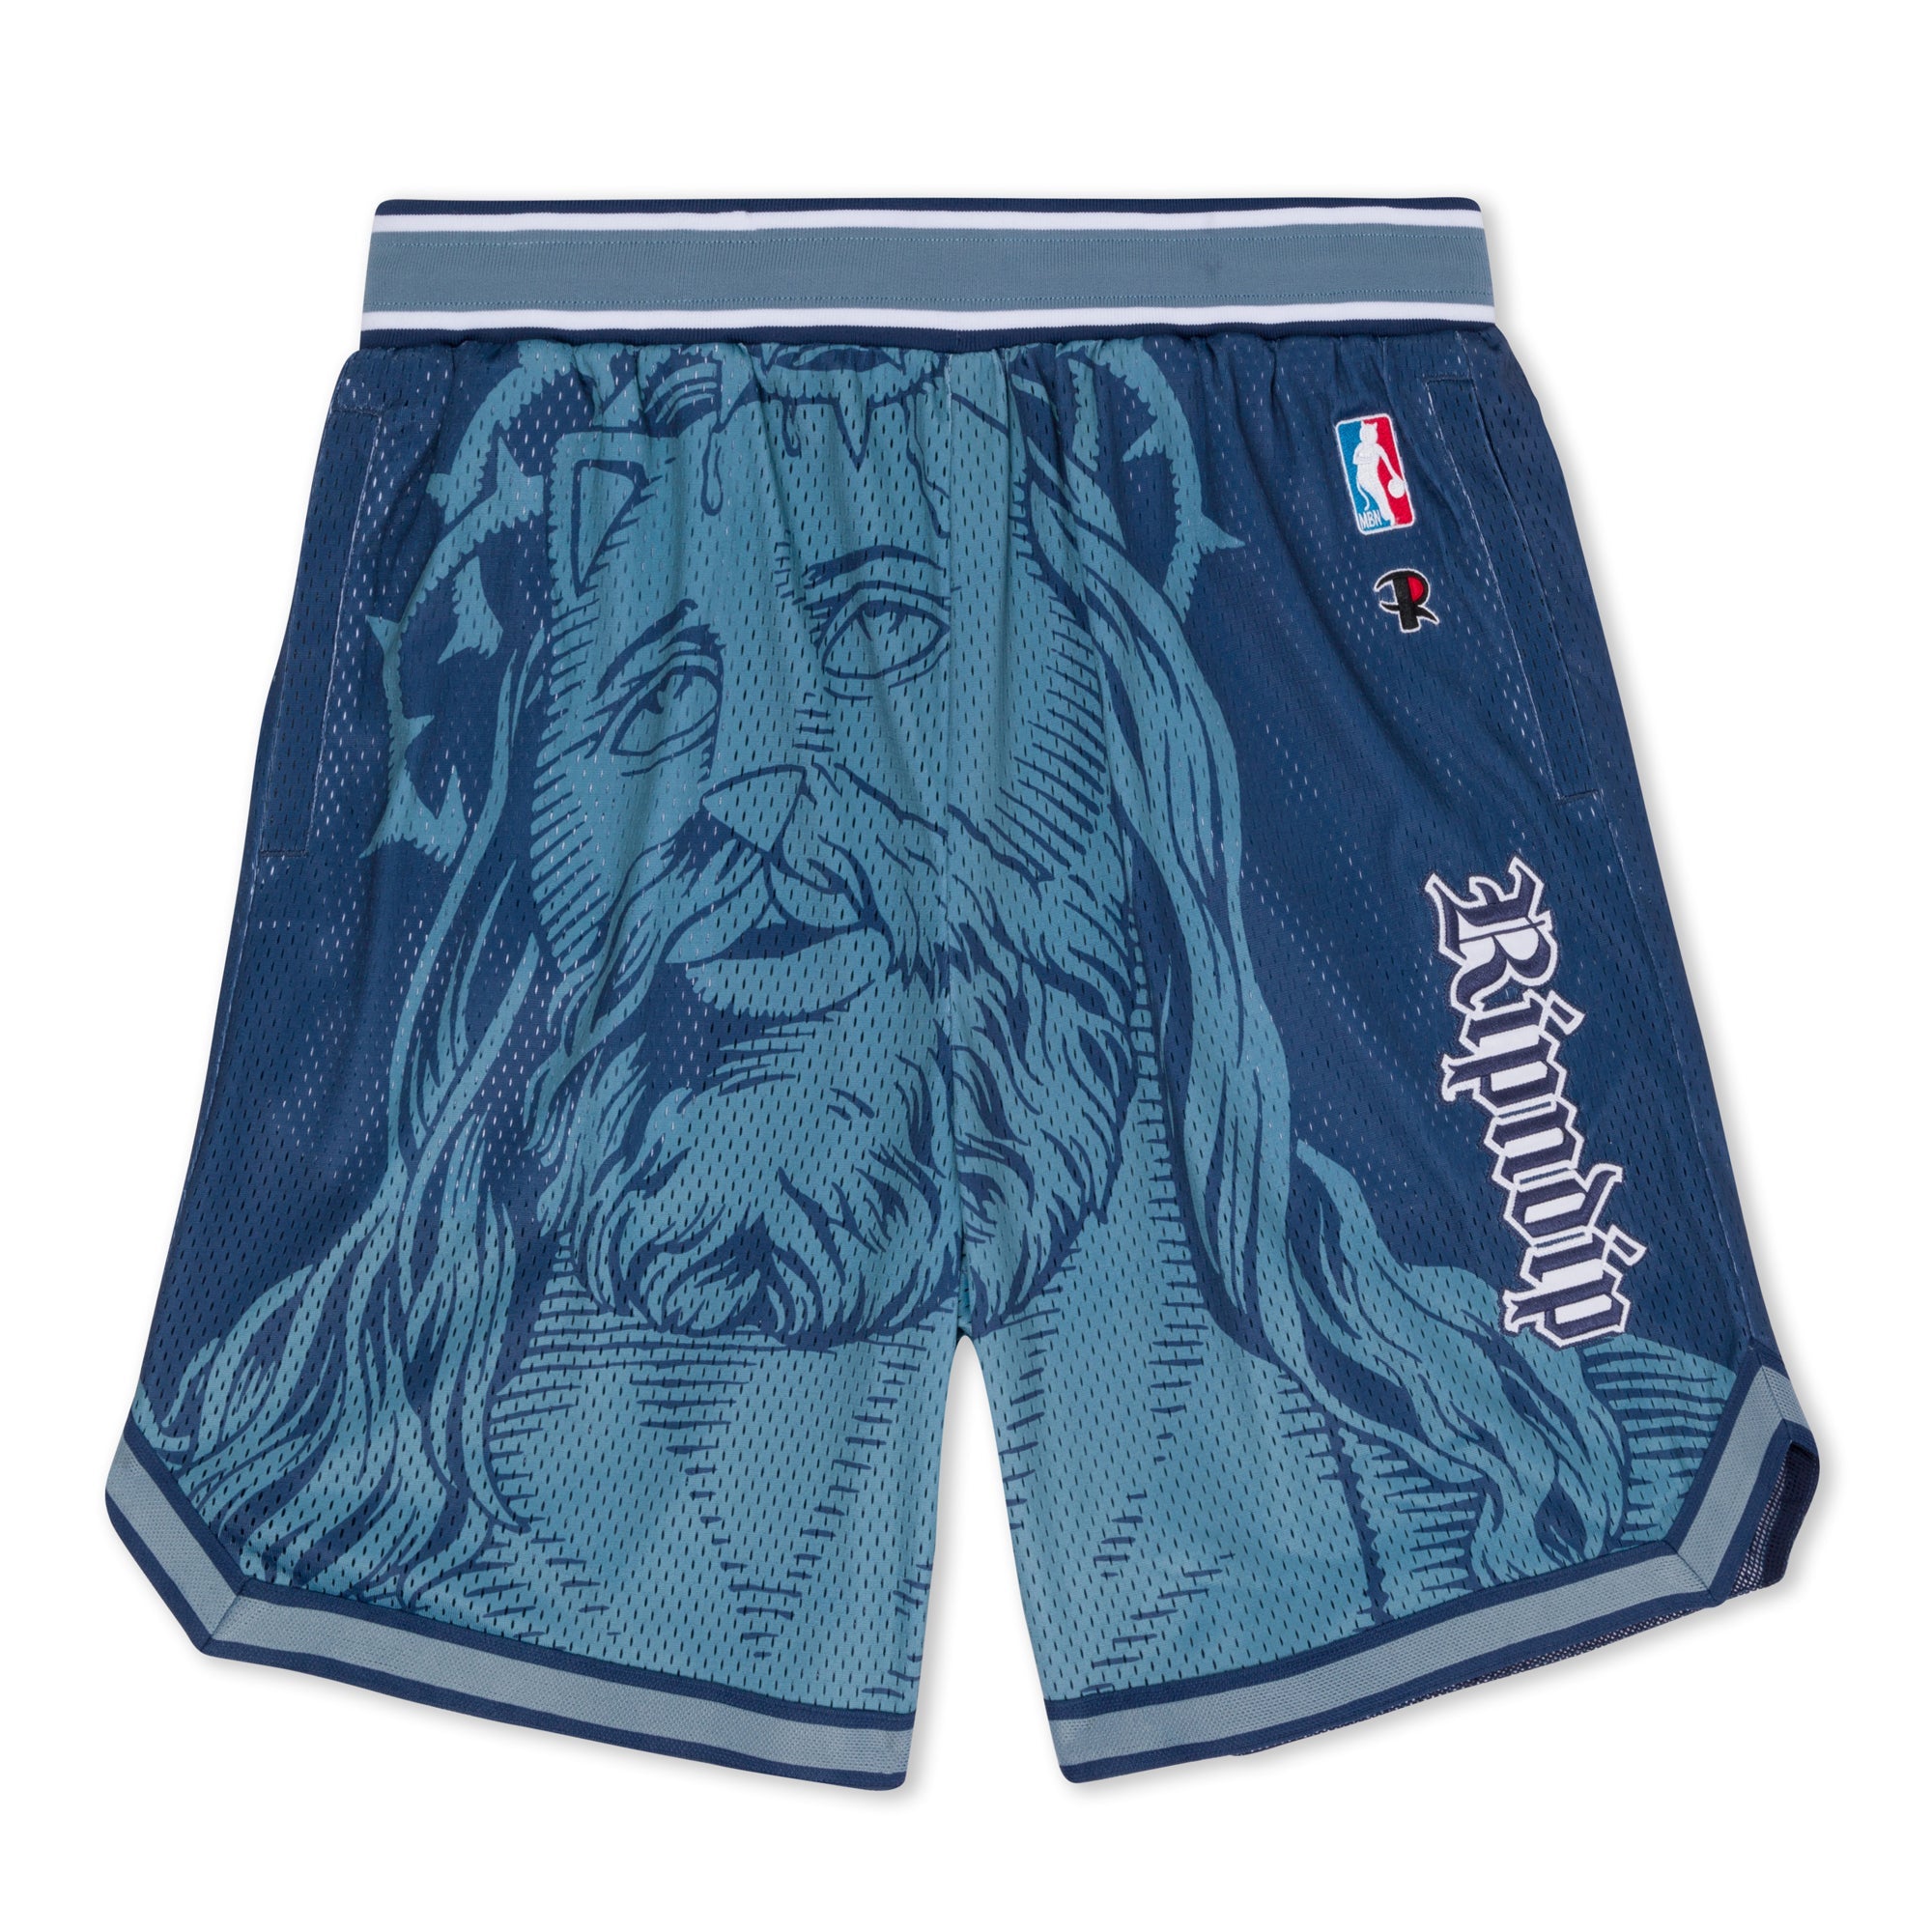 Lord Savior Nerm Basketball Shorts (Navy)